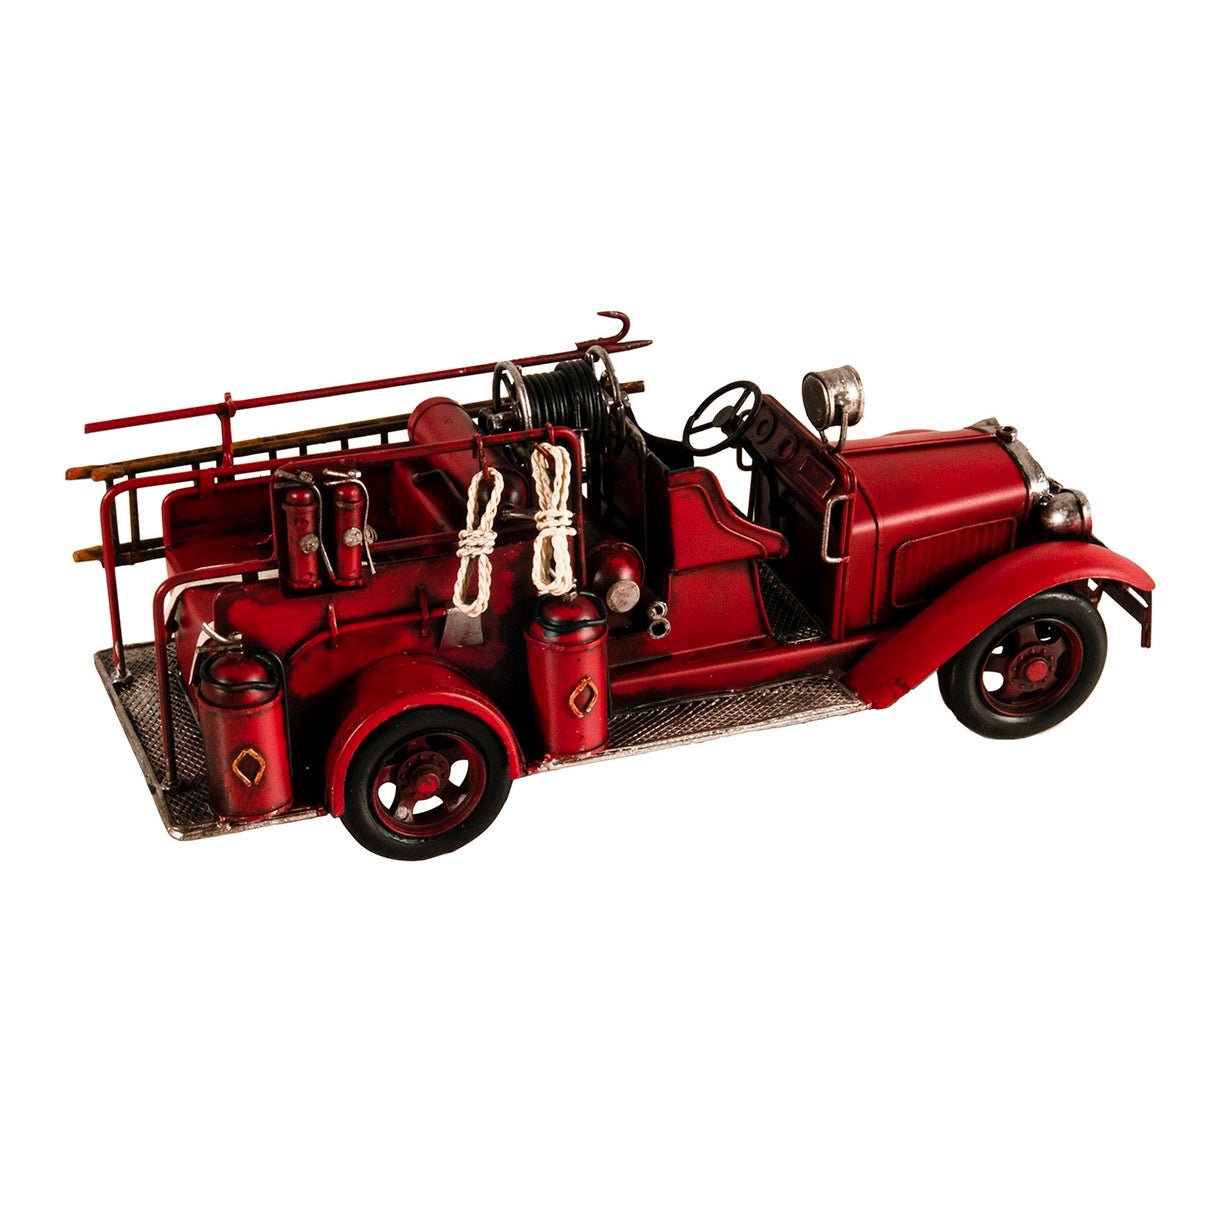 Old Modern Handicrafts, Handmade 1910s Fire Engine Truck Model, Pre - built Model